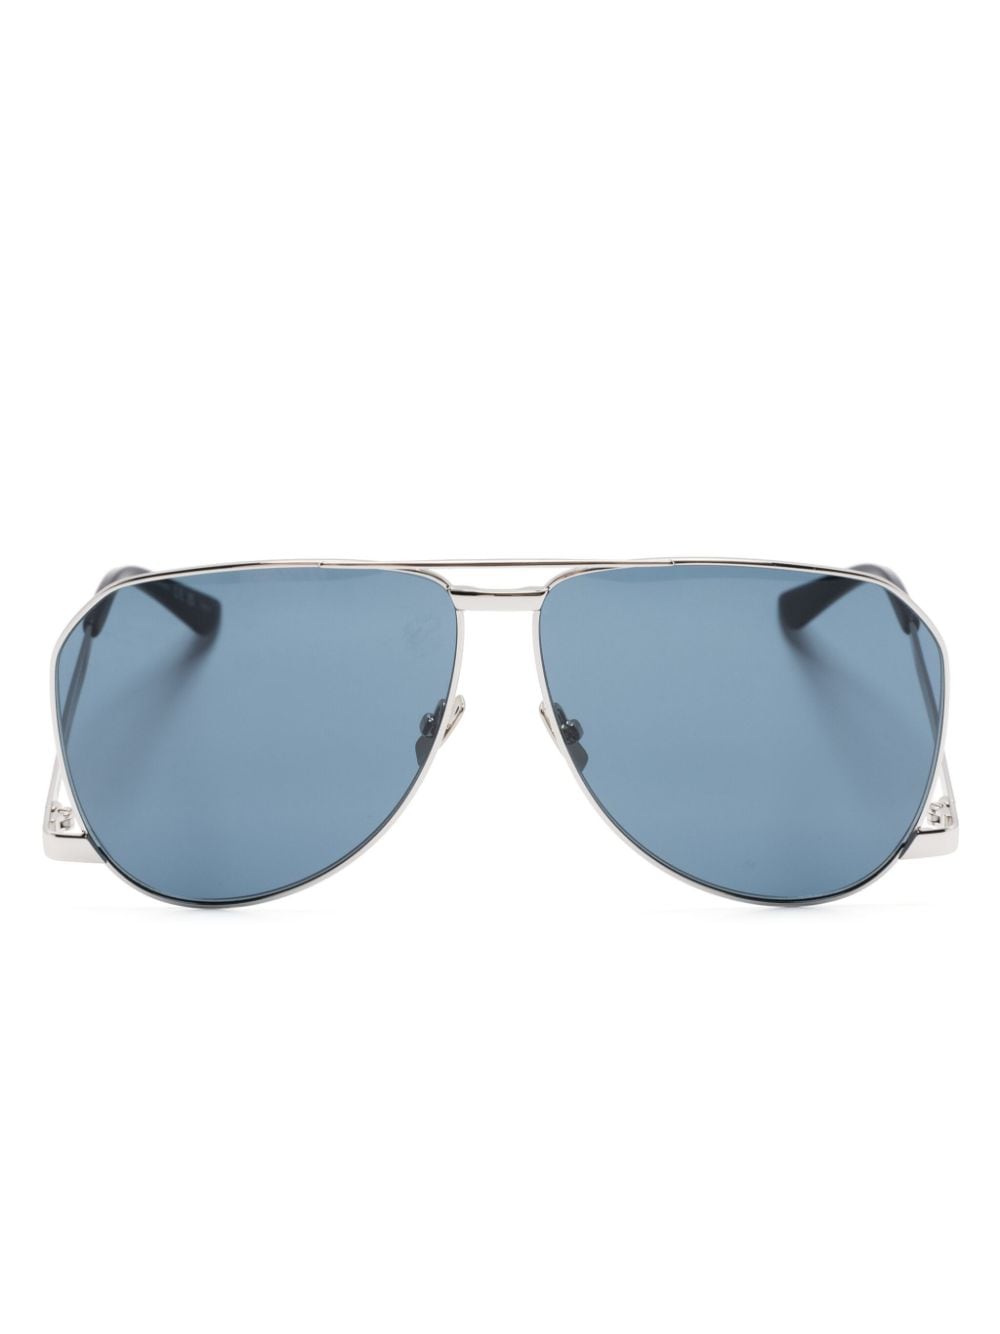 Saint Laurent Eyewear SL 690 Dust pilot-frame sunglasses - Silver von Saint Laurent Eyewear